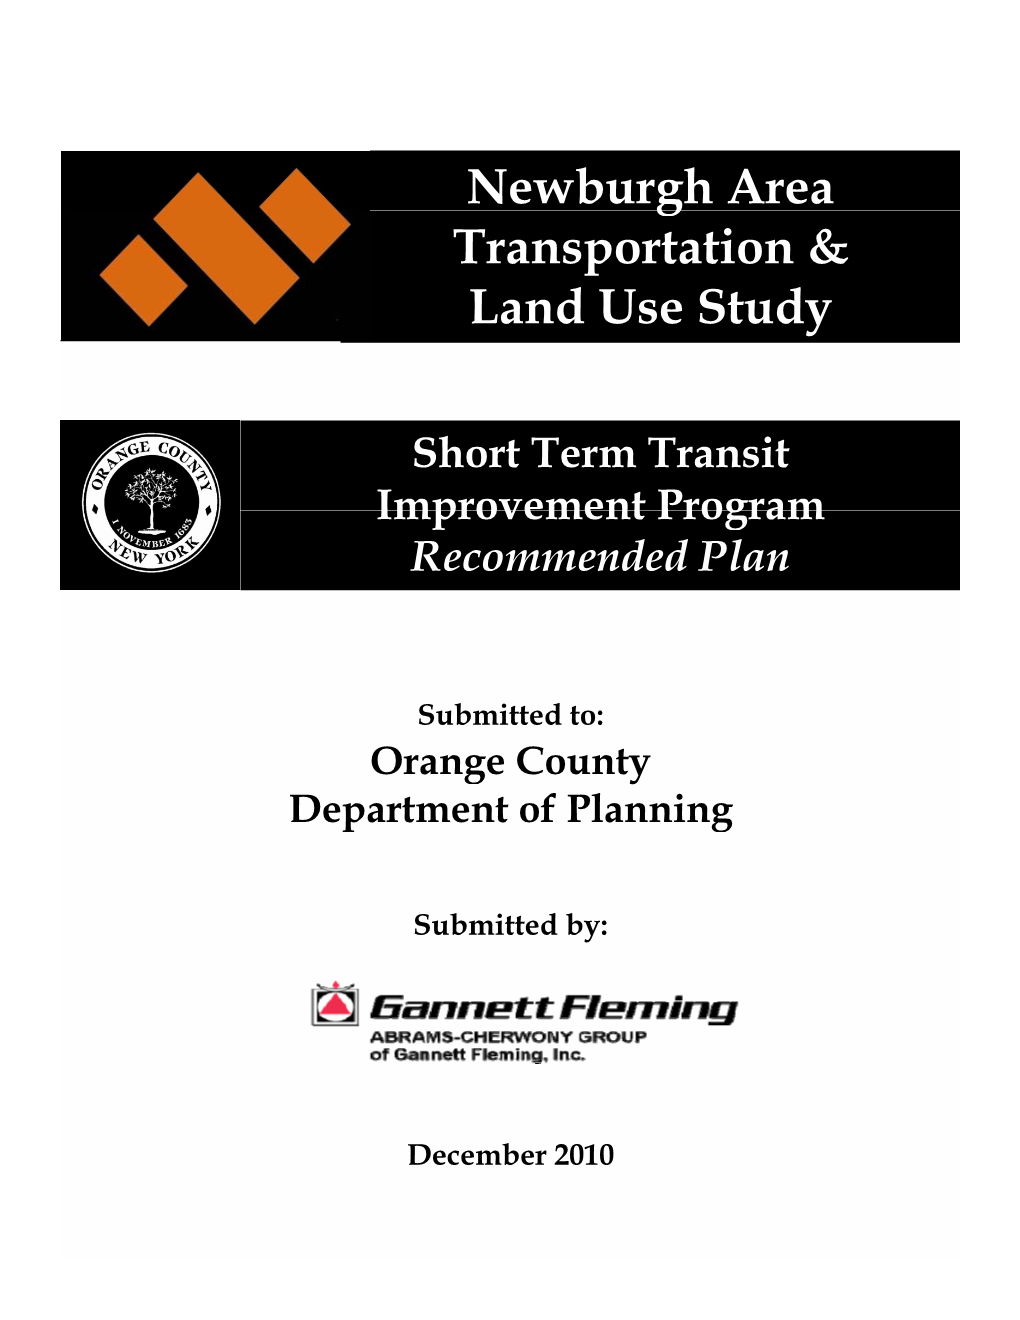 Newburgh Area Transit Improvement Plan, December 2010